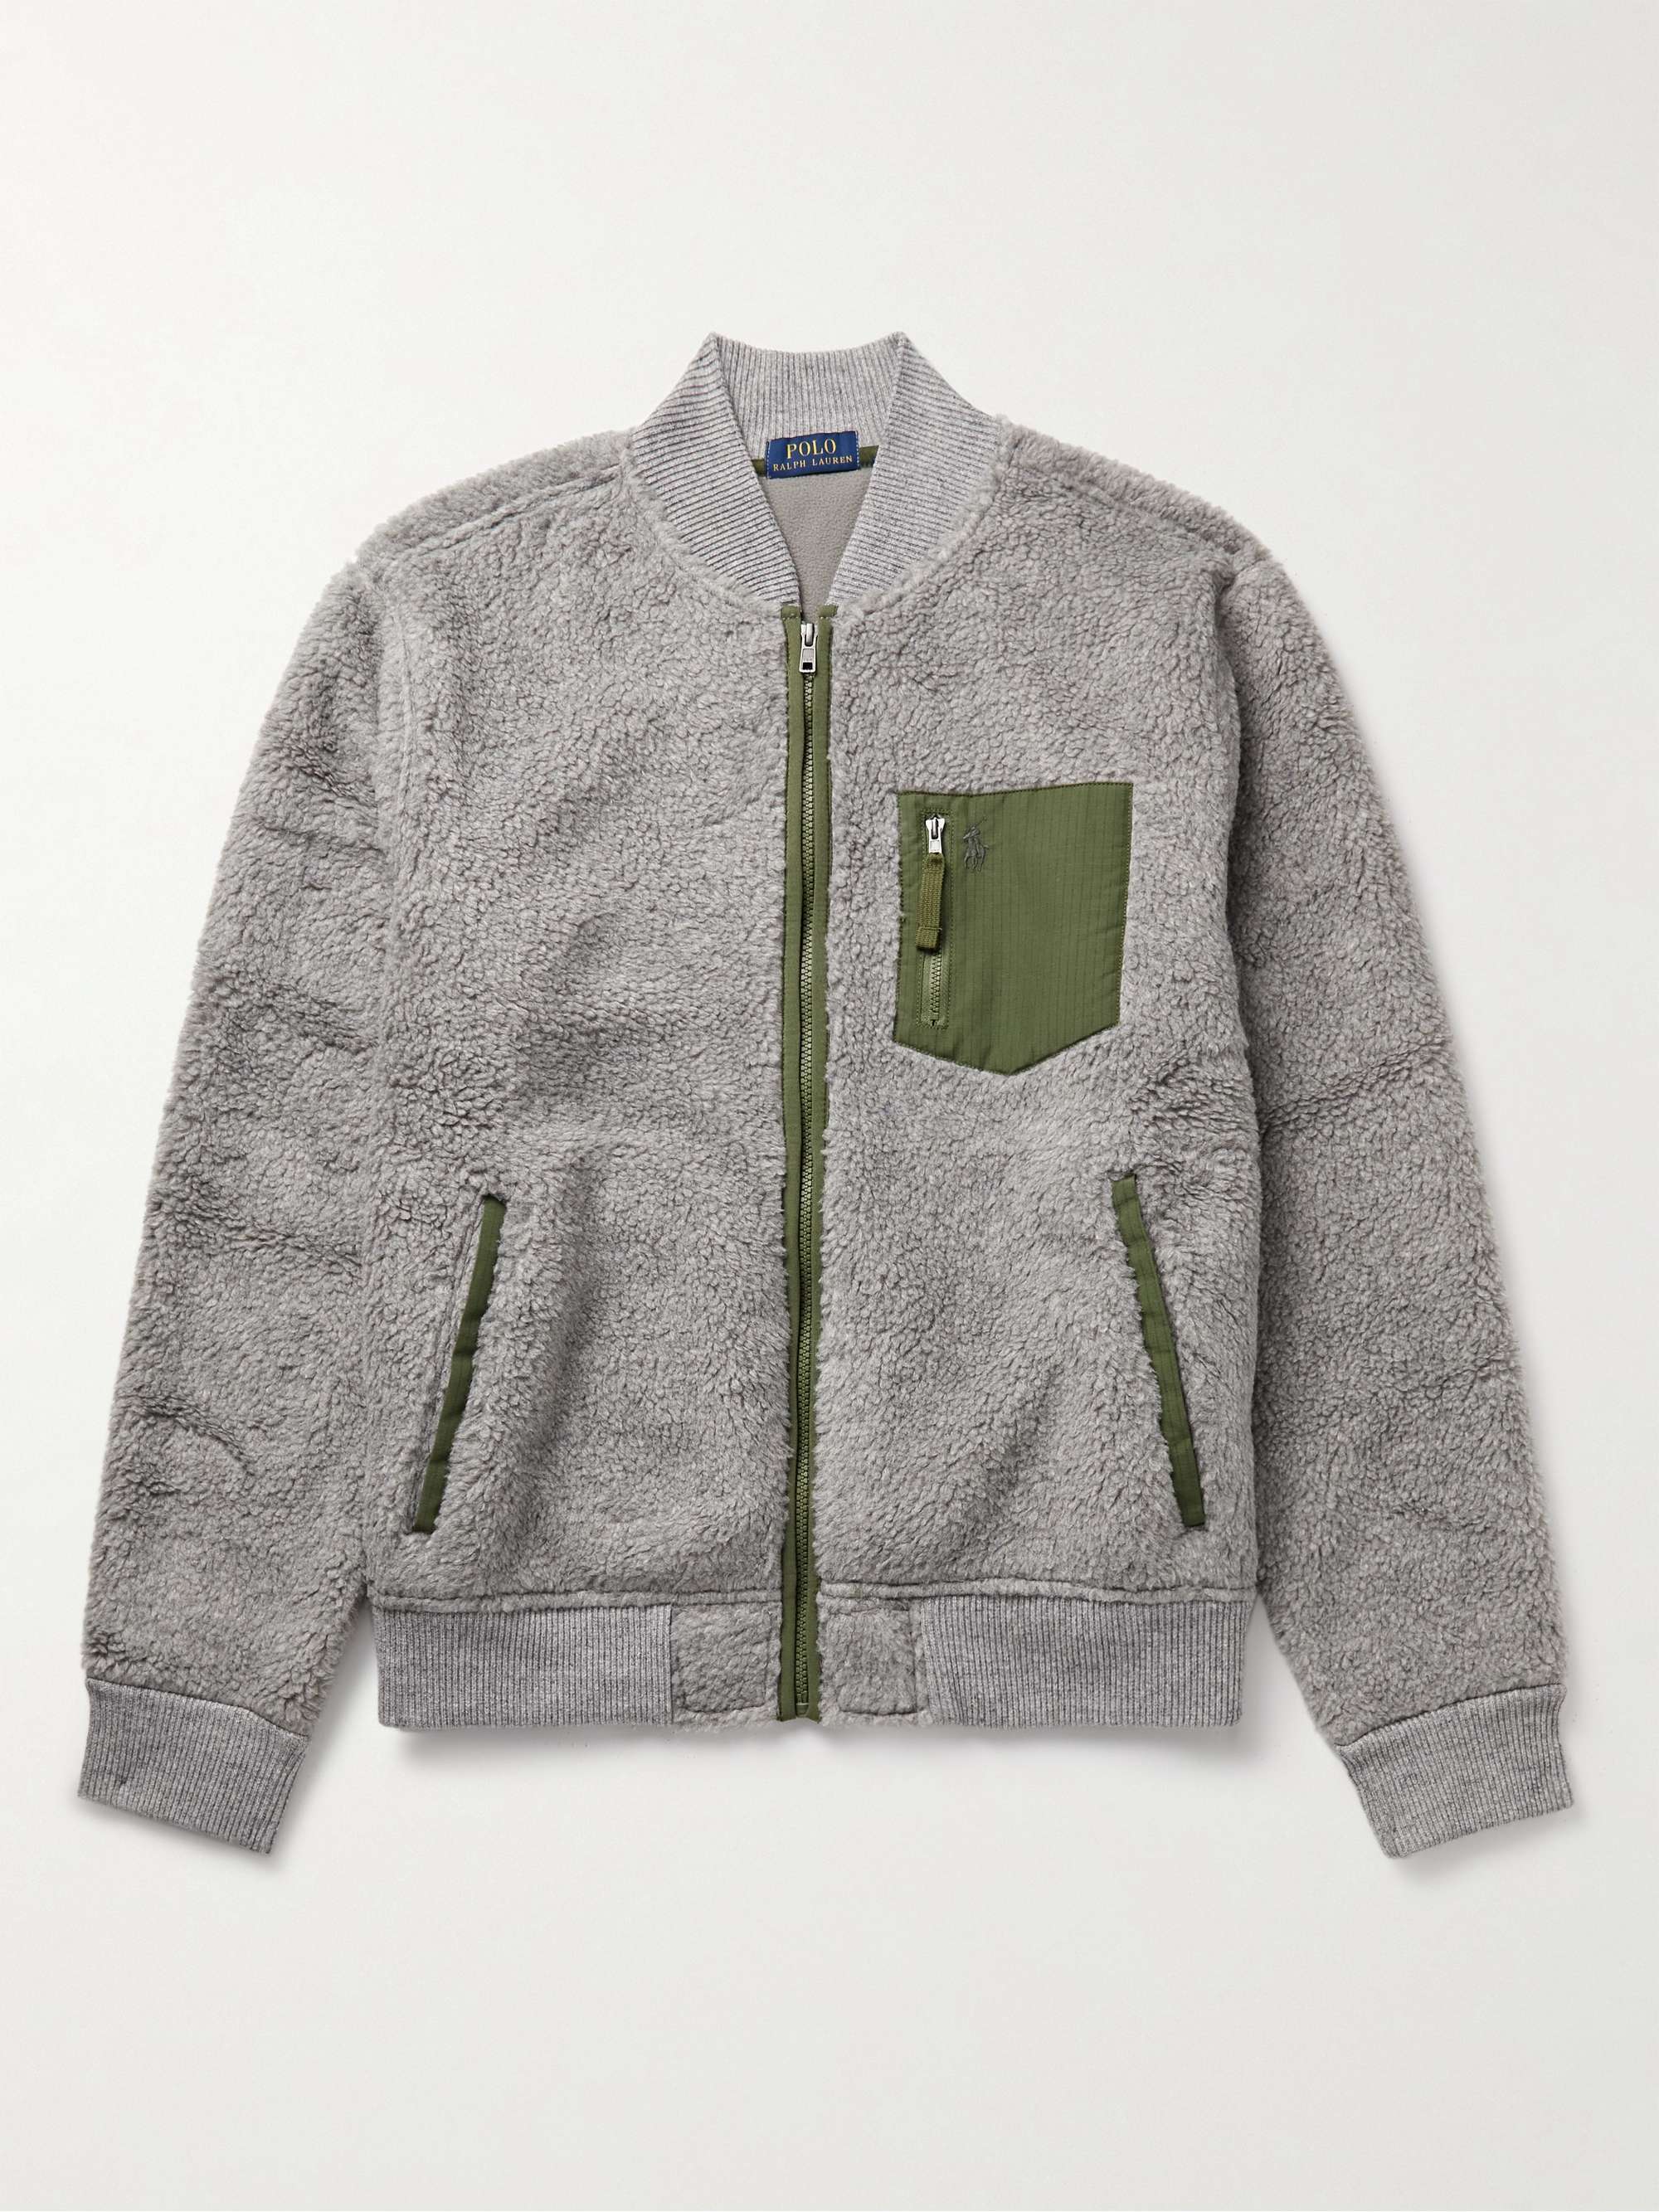 POLO RALPH LAUREN Logo-Embroidered Shell-Trimmed Fleece Jacket,Gray